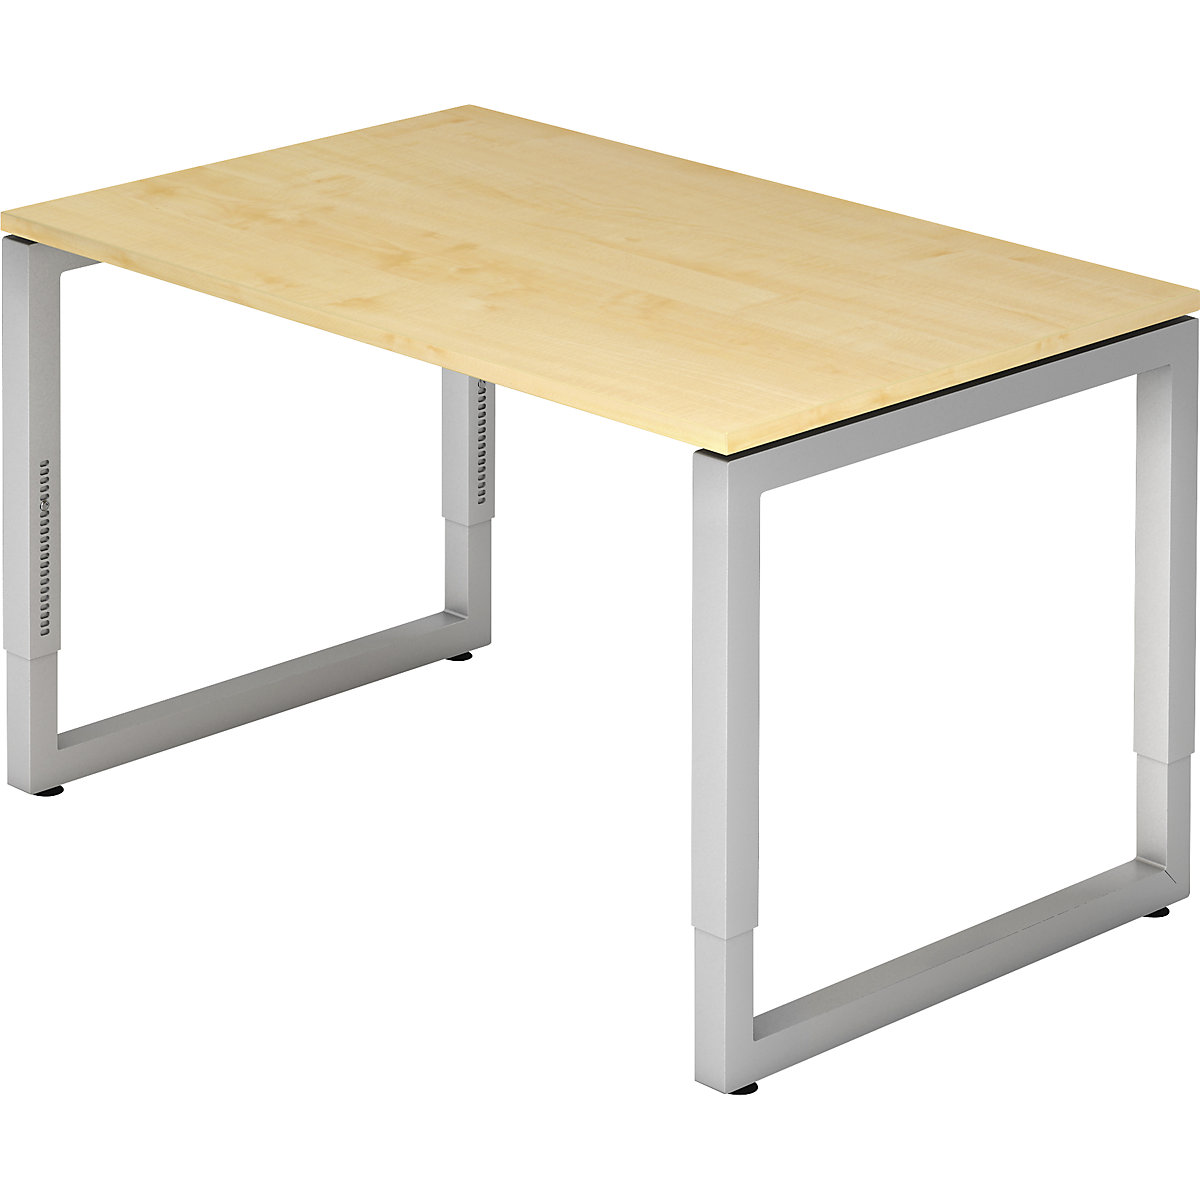 Bureautafel met frame van vierkante staalbuis ANNY – eurokraft pro, b x d = 1200 x 800 mm, ahornhoutdecor-7